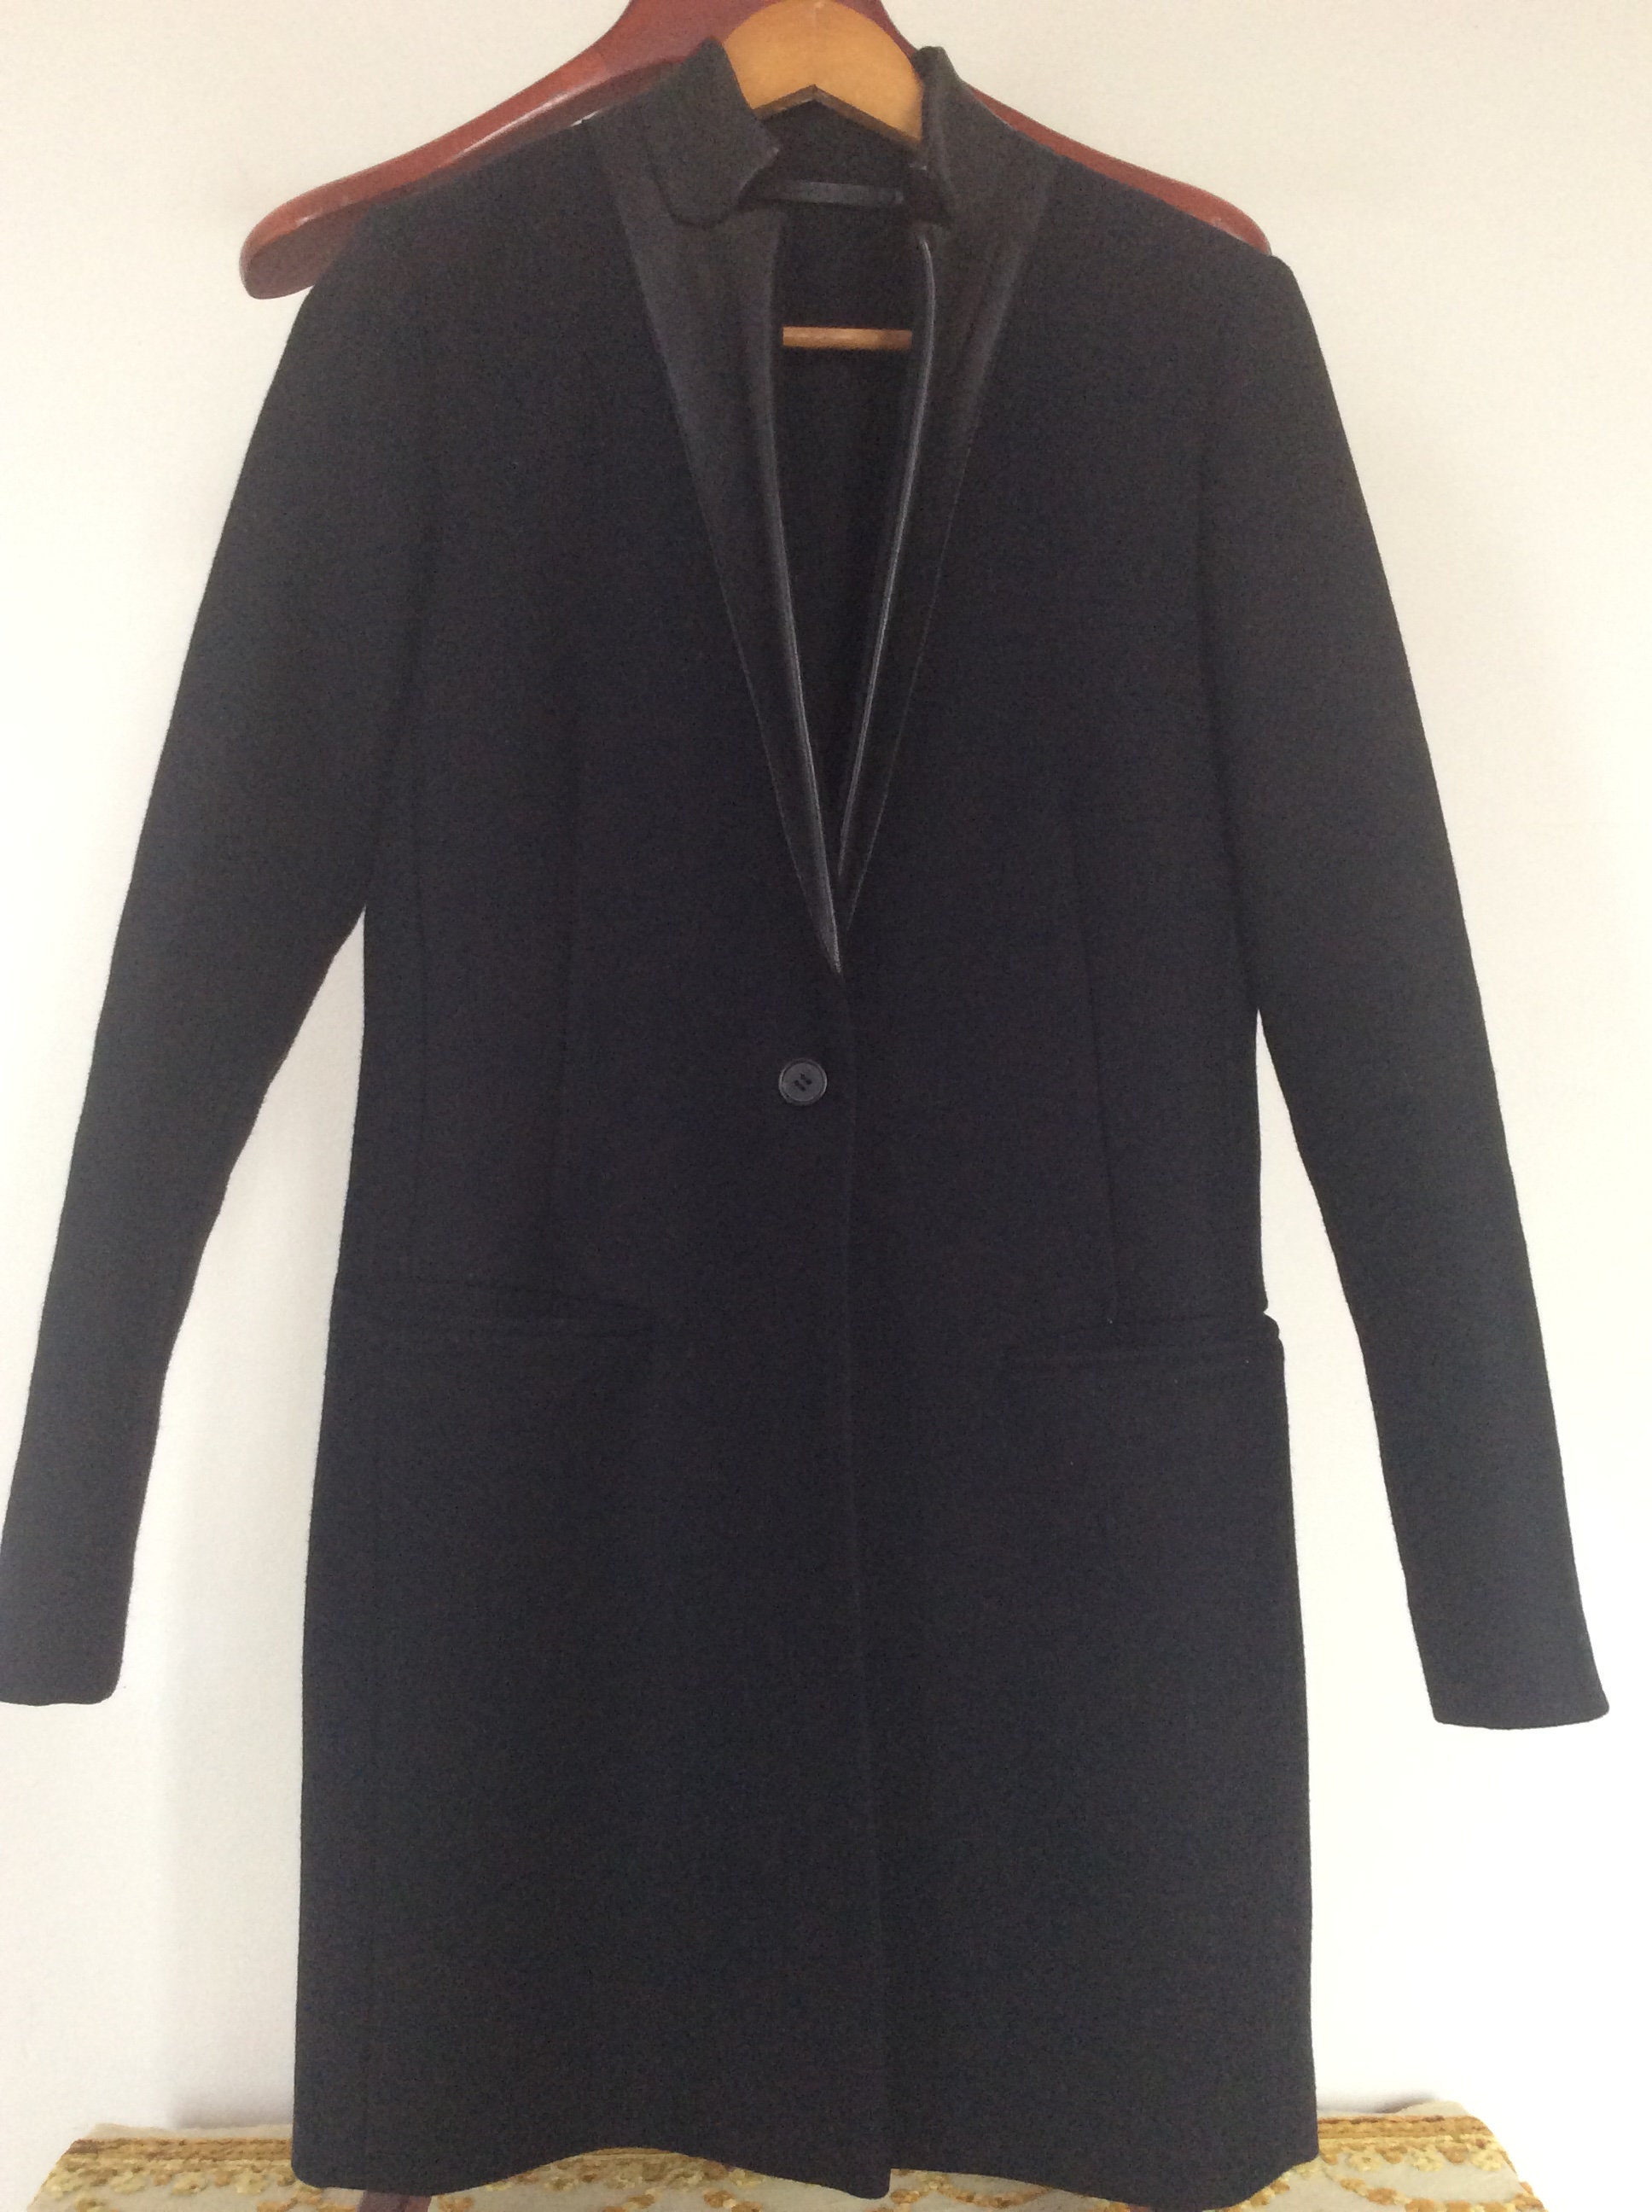 All Saints Wool Coat with Leather details Size UK 8 EU 36 US | Etsy